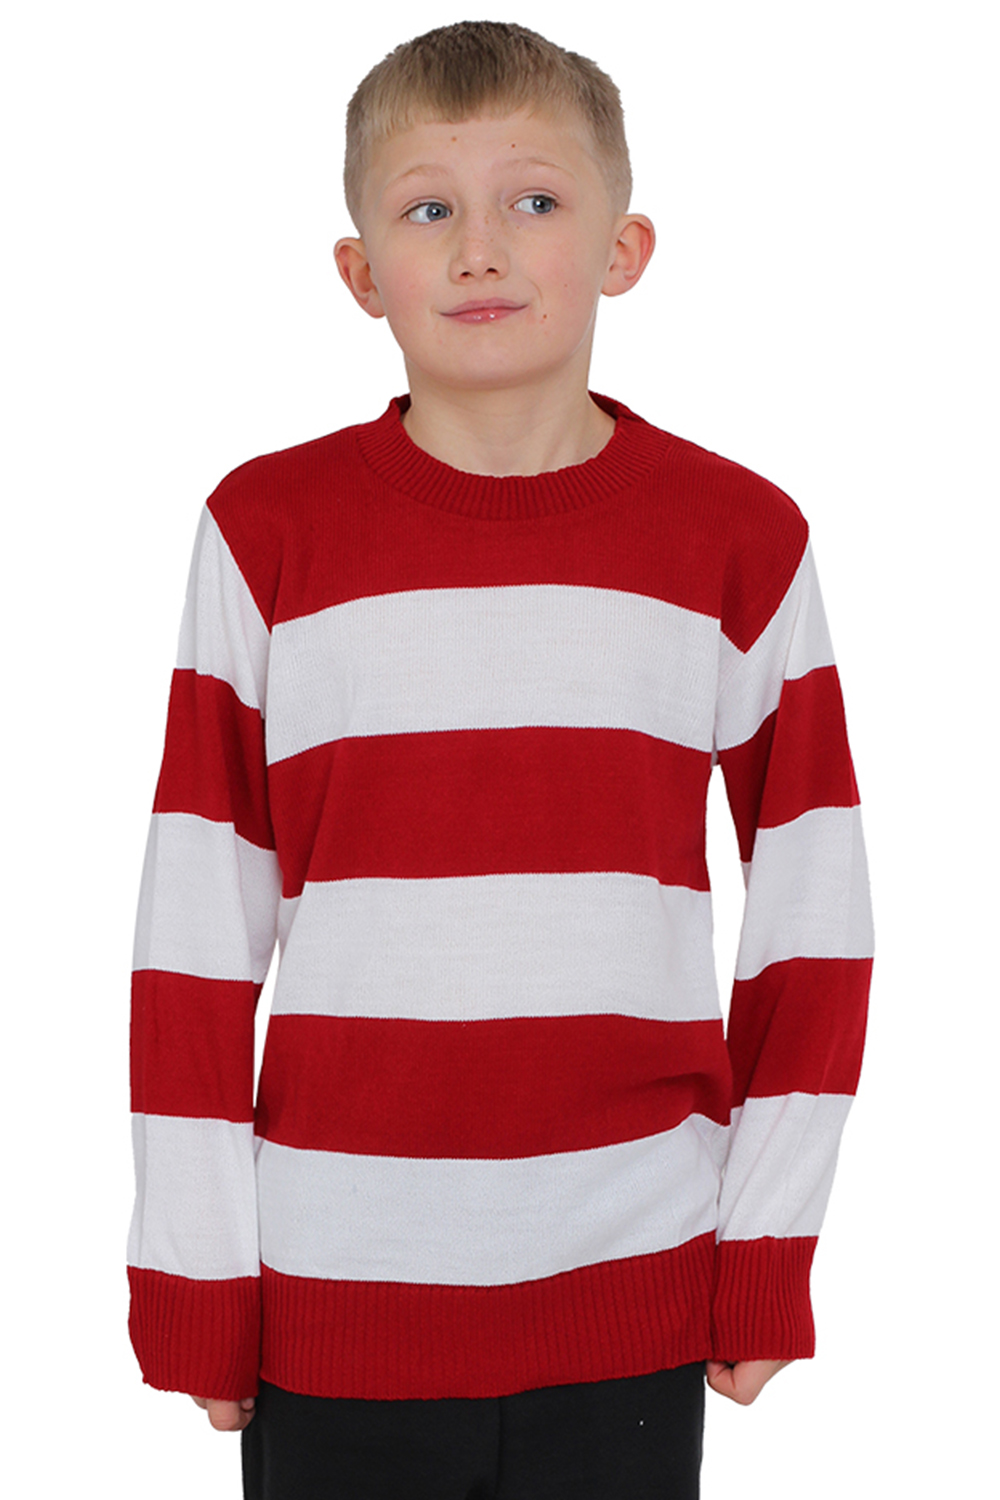 Wickedfun Children's Red and White Stripe Knitted Jumper